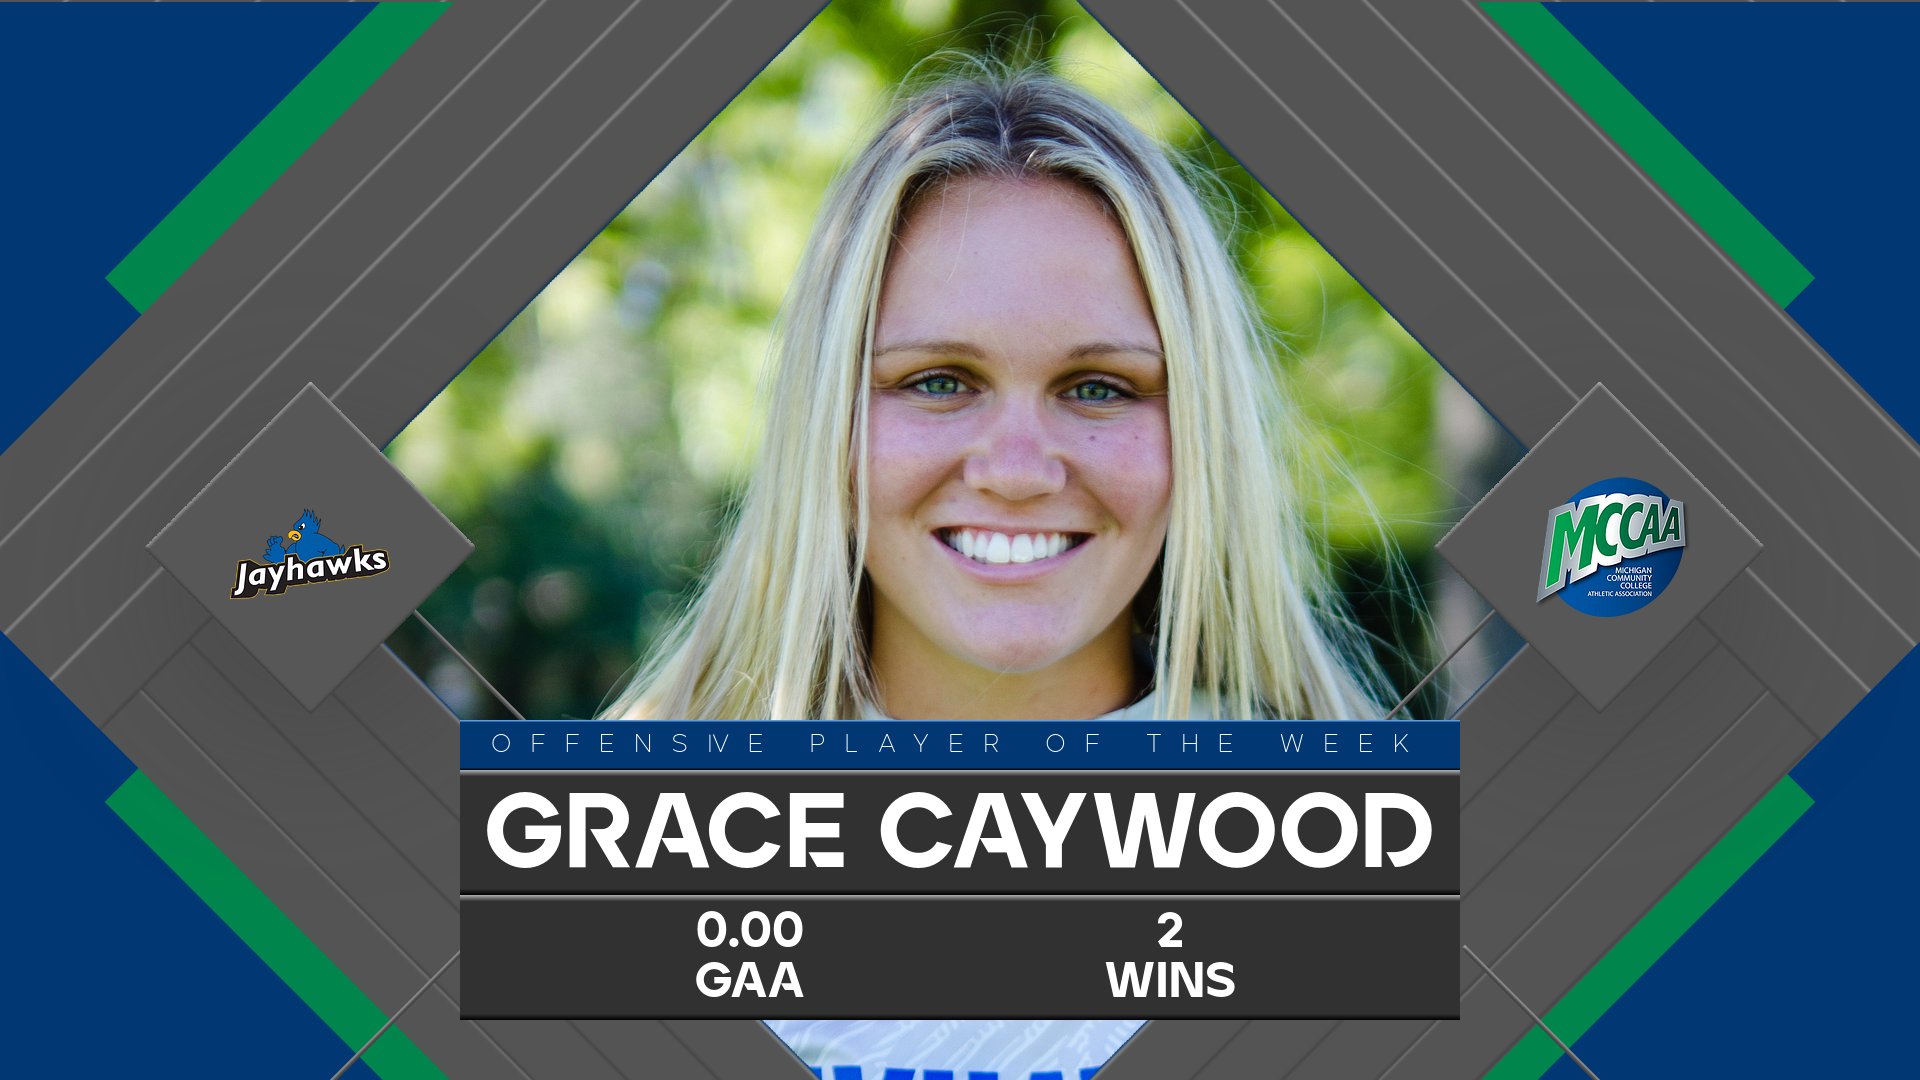 Grace Caywood, MCCAA Women's Soccer Goalkeeper of the Week, Muskegon CC